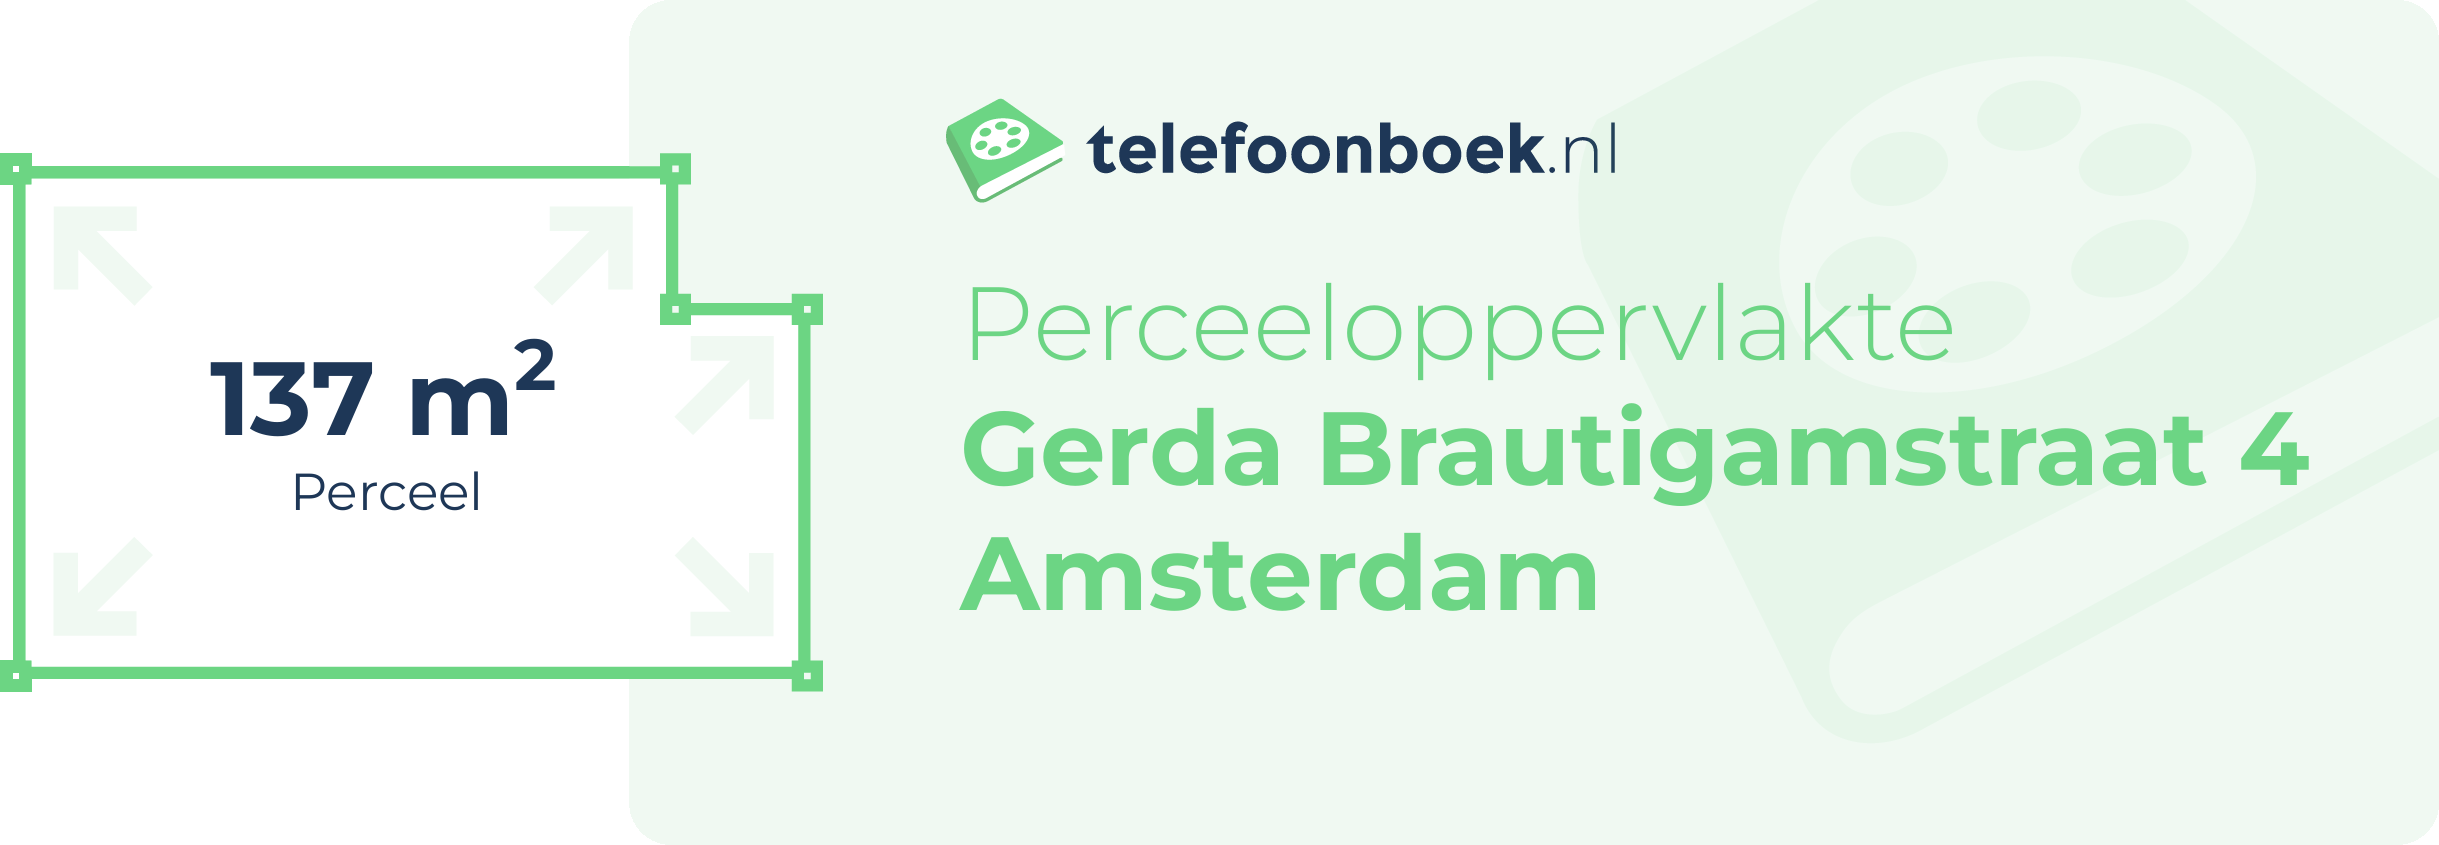 Perceeloppervlakte Gerda Brautigamstraat 4 Amsterdam